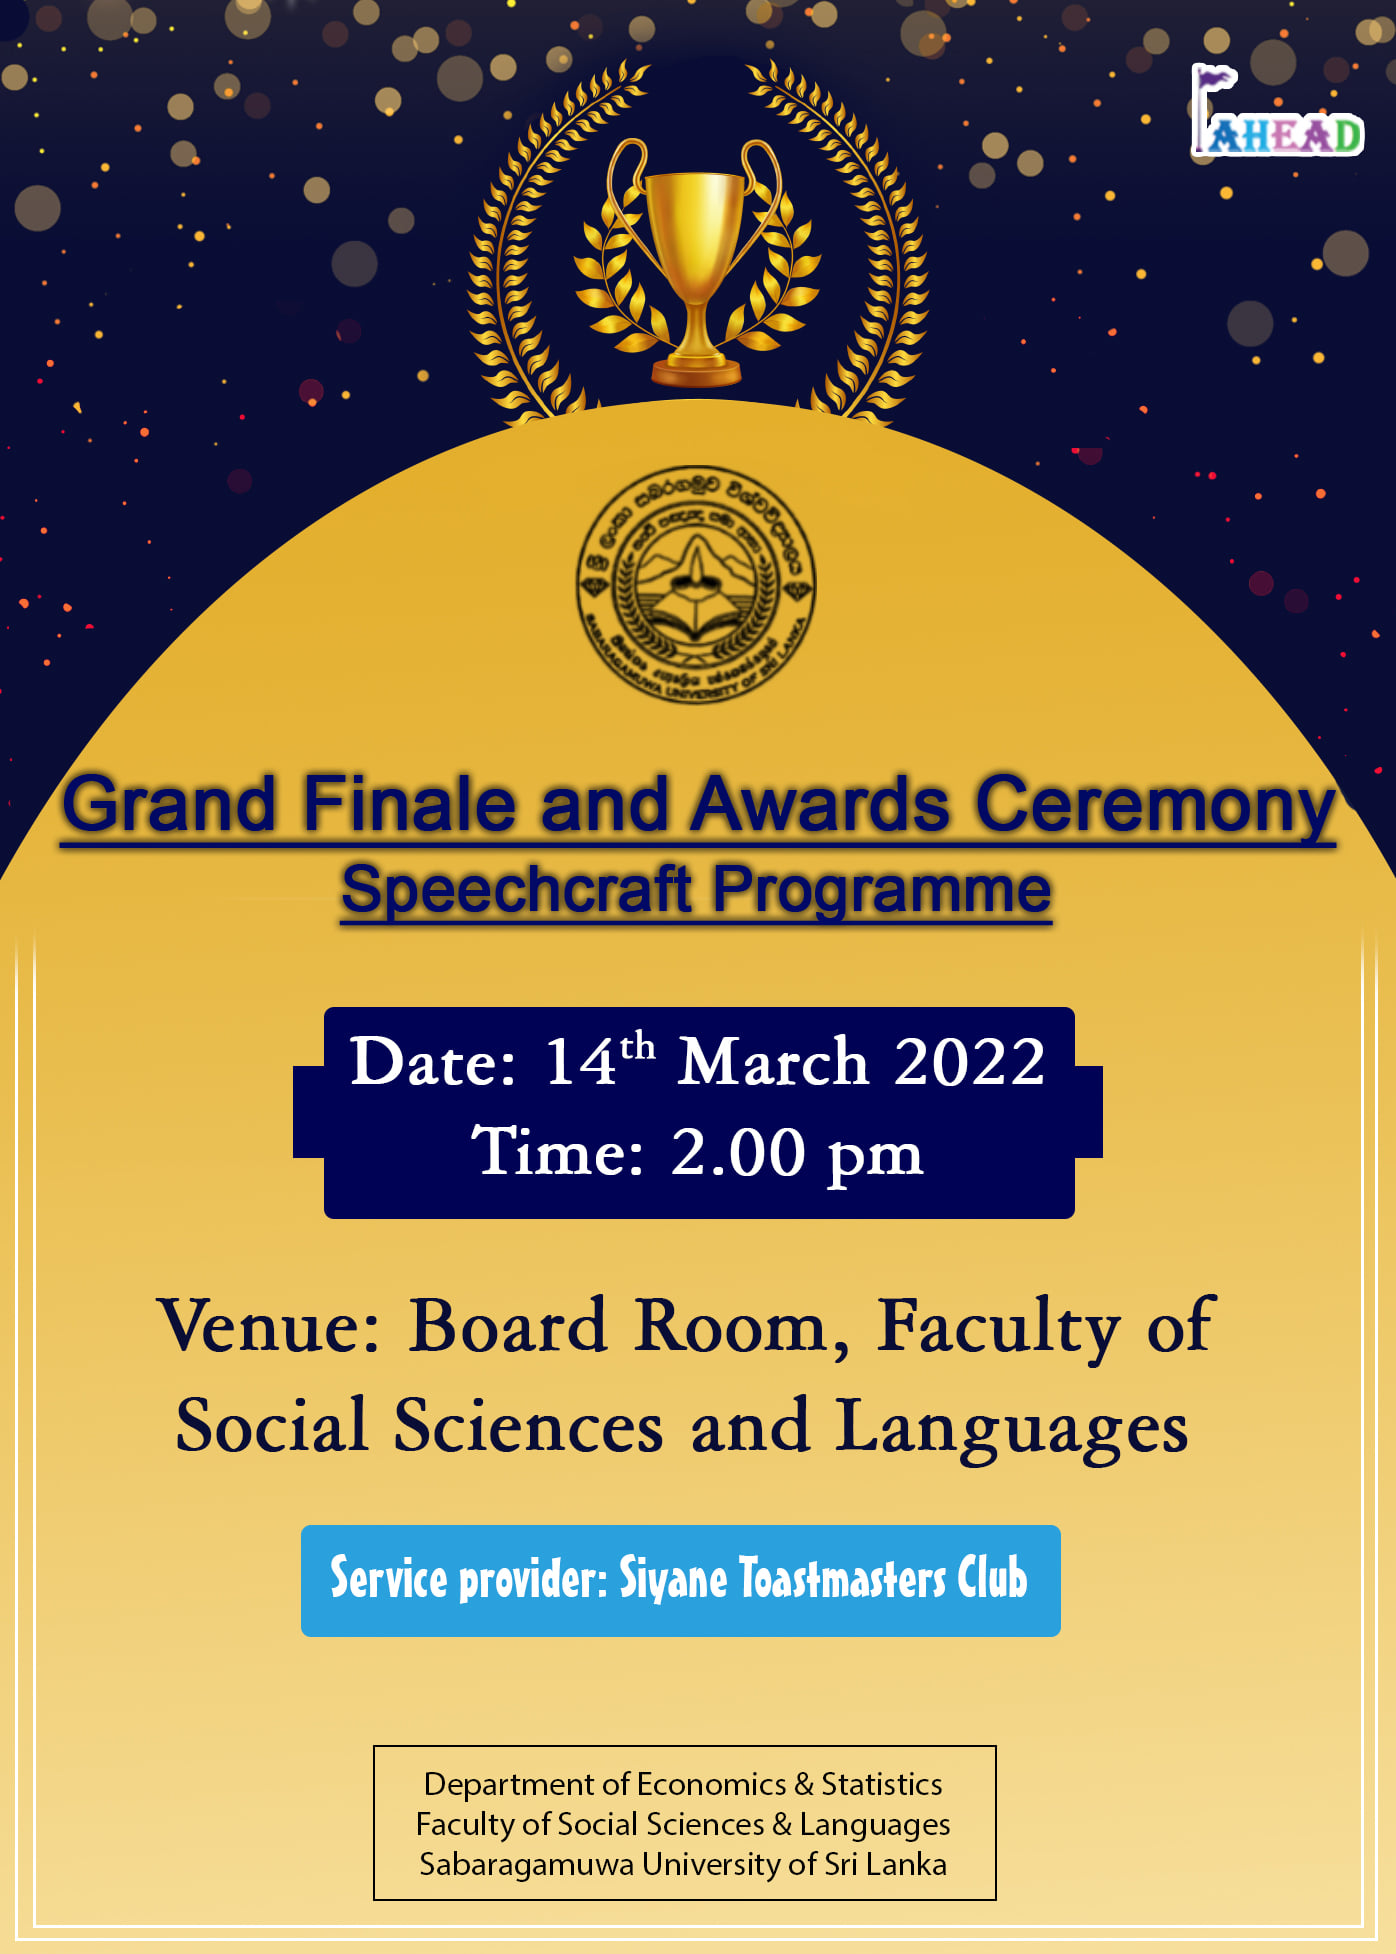 Grand Finale and Awards Ceremony (Speechcraft Programme)